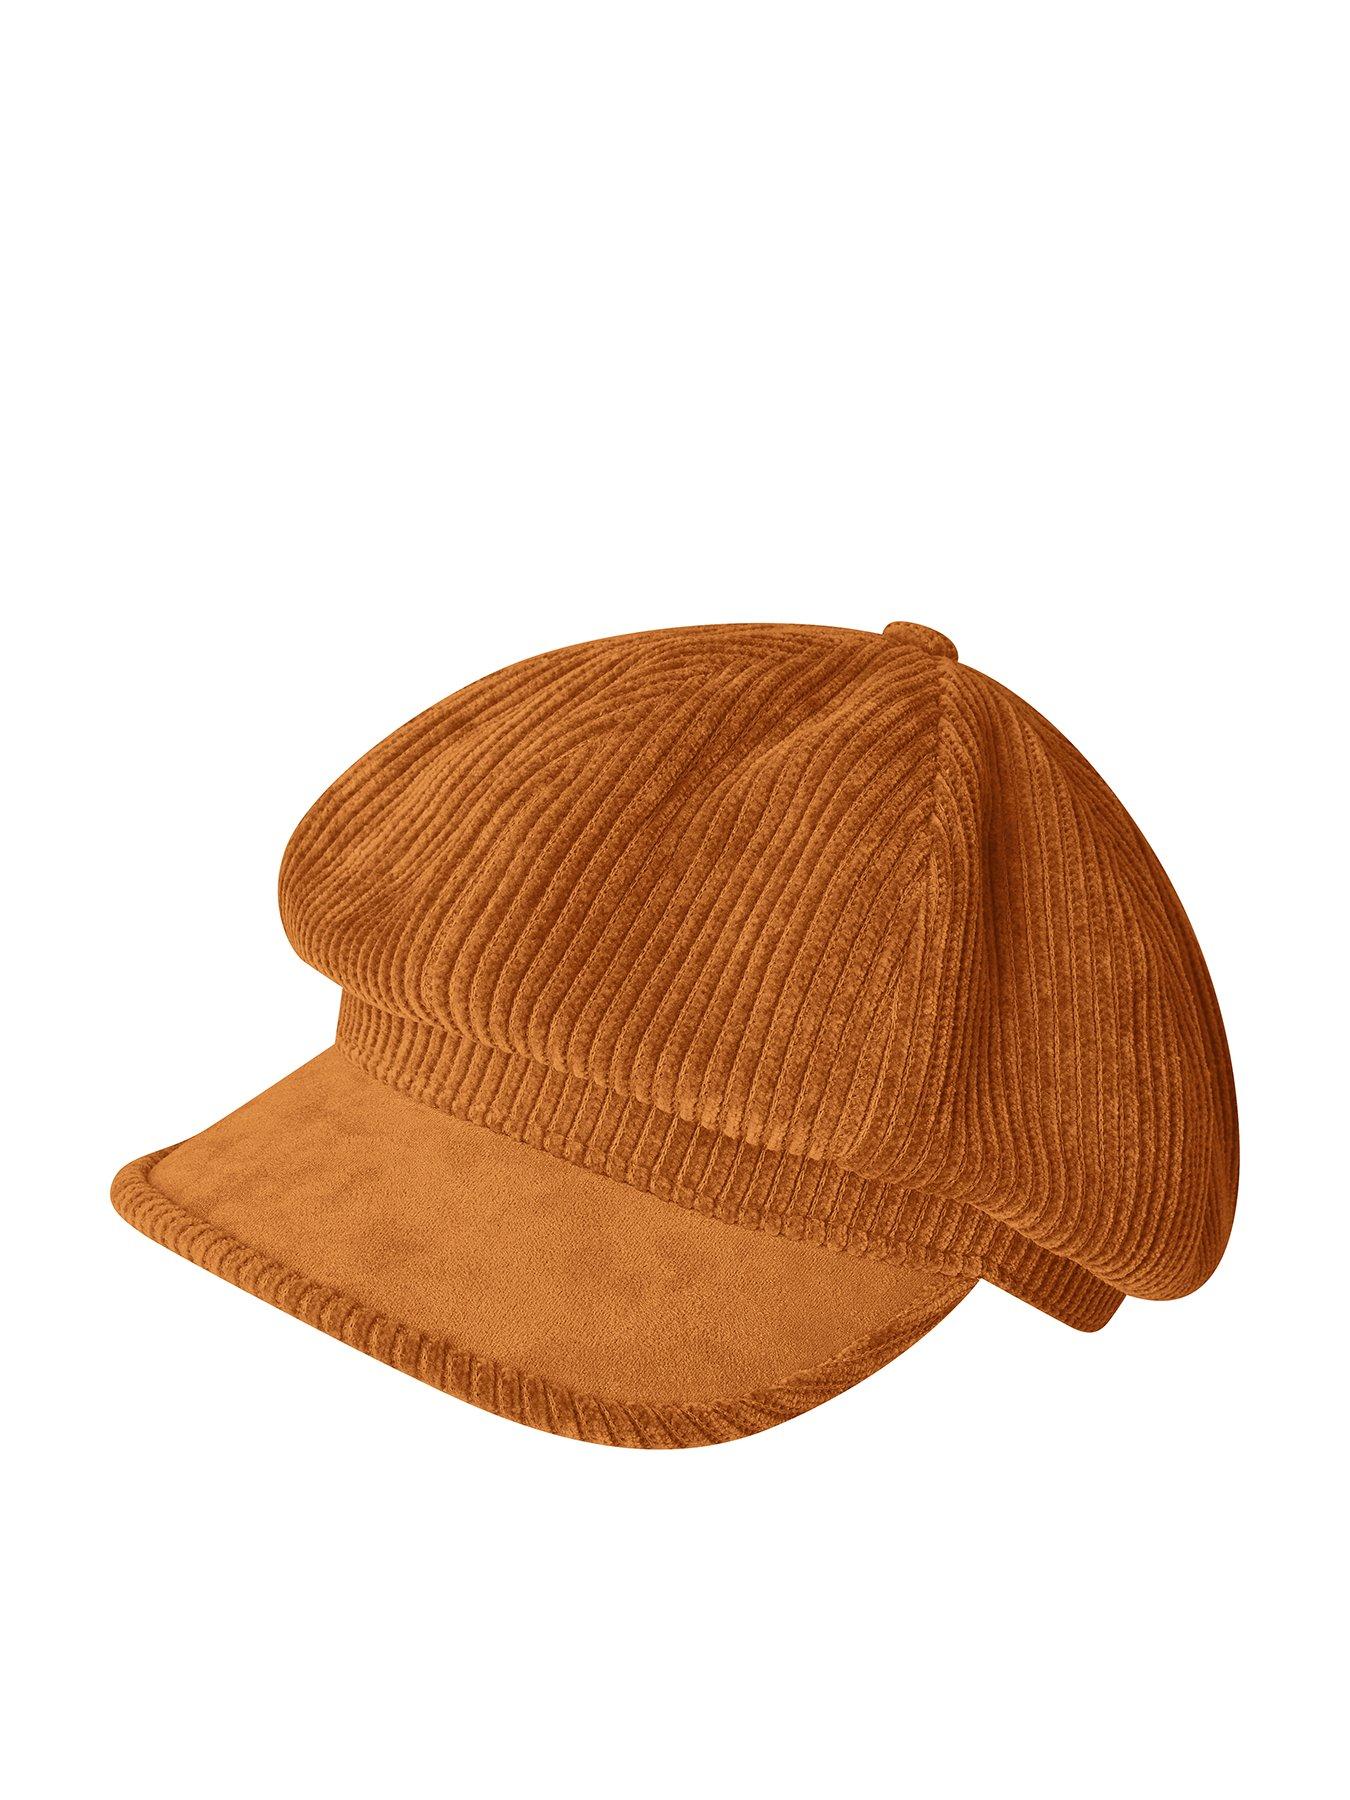 Accessories Vintage Style Cord Baker Boy Hat - Tan